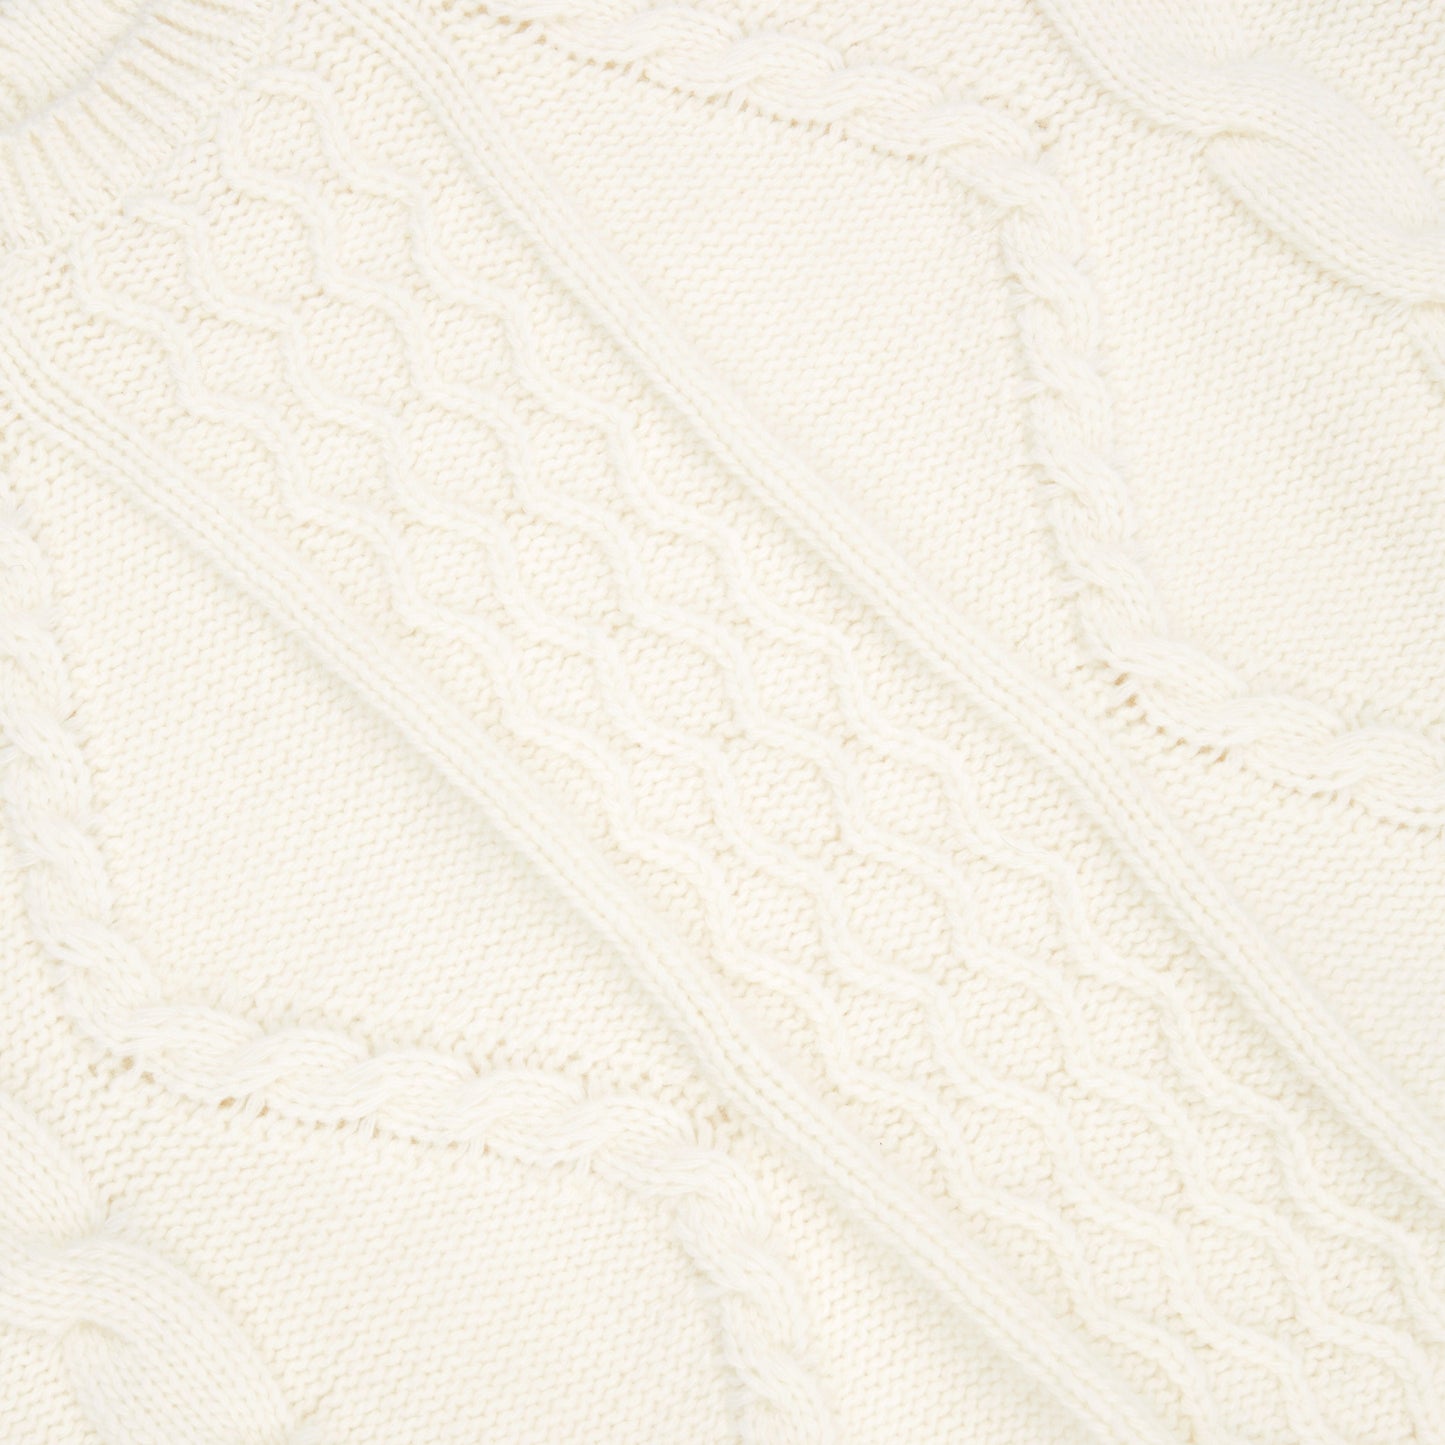 Women's Fisherman Cable Knit Sweater Vest